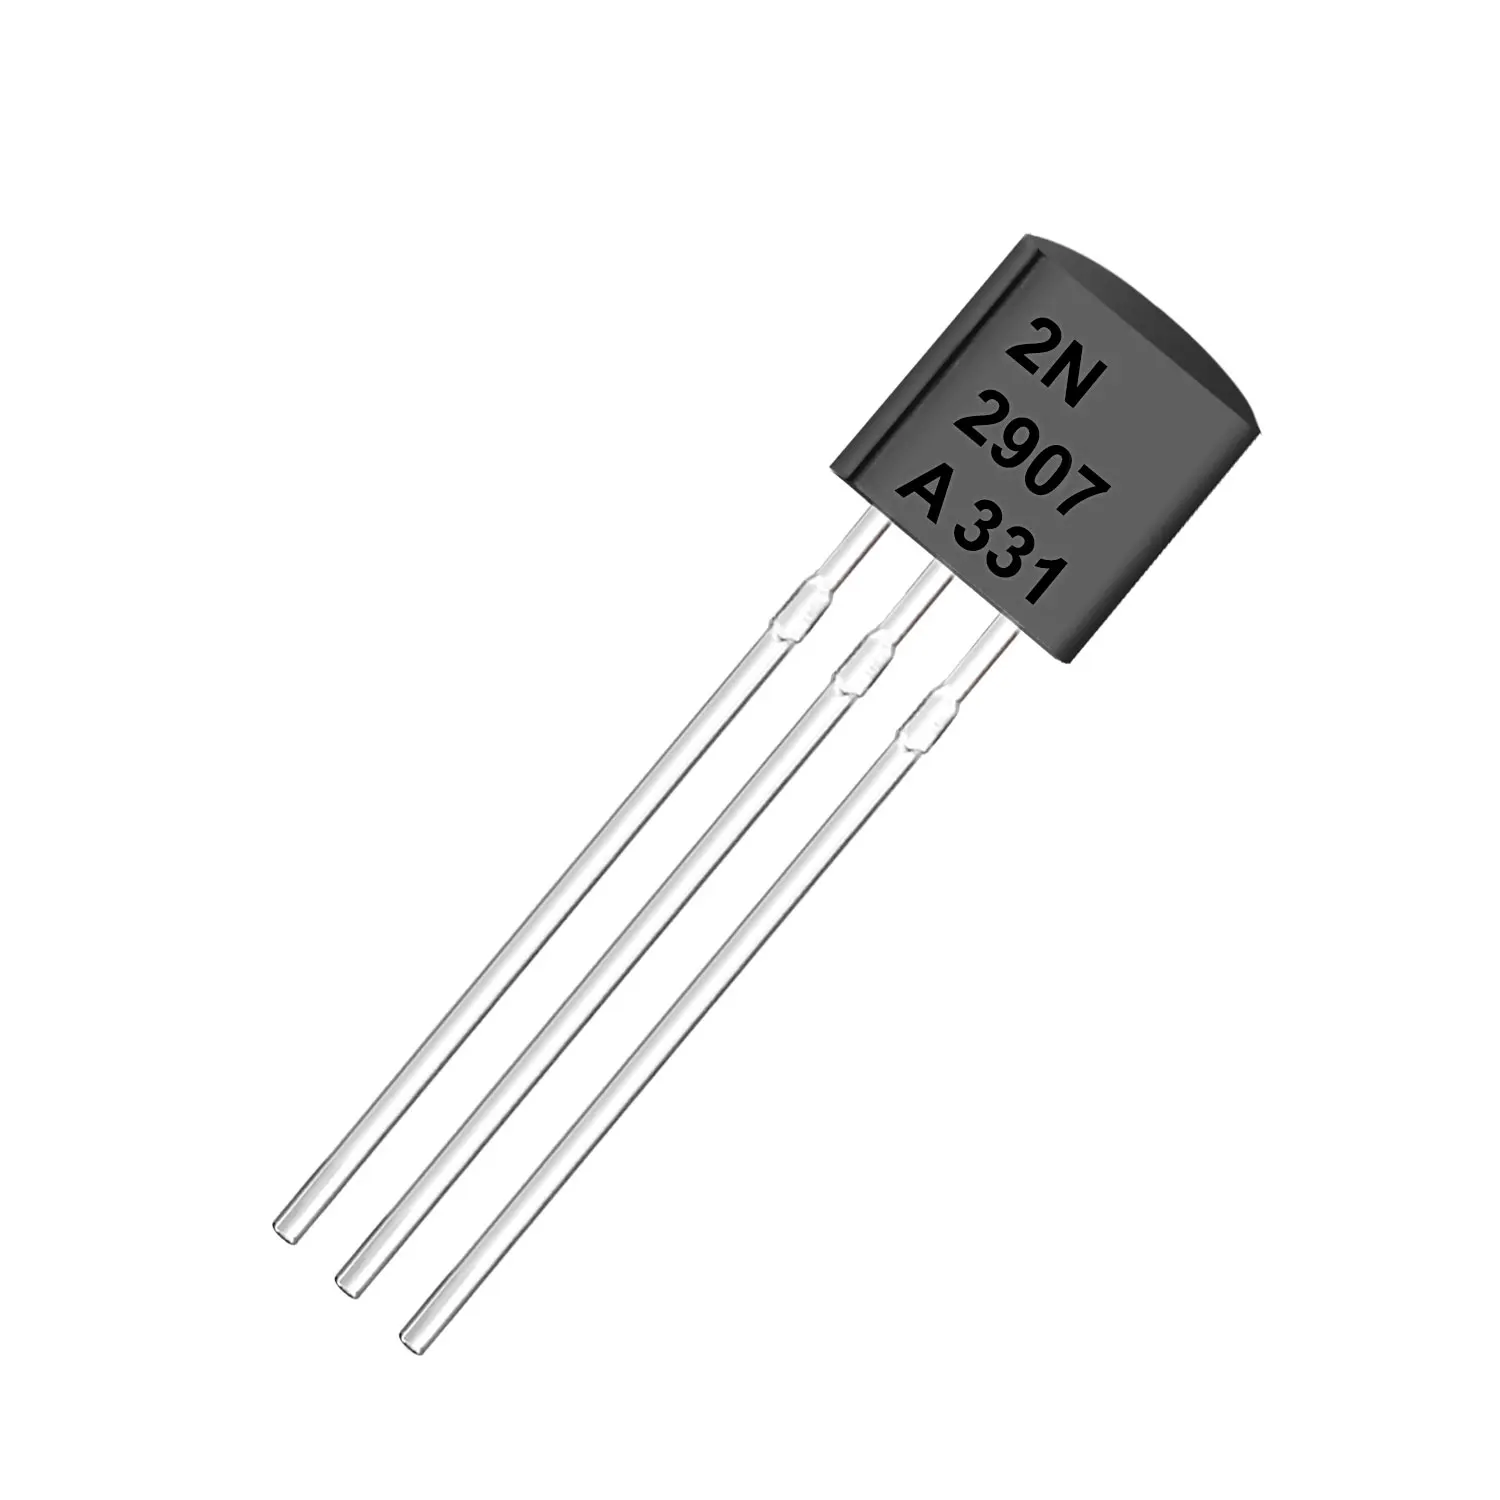 NOS 2 PCS BC181 Texas Instruments Orig 2X Transistor TO-92 PNP 0,3W 0,1A 25V